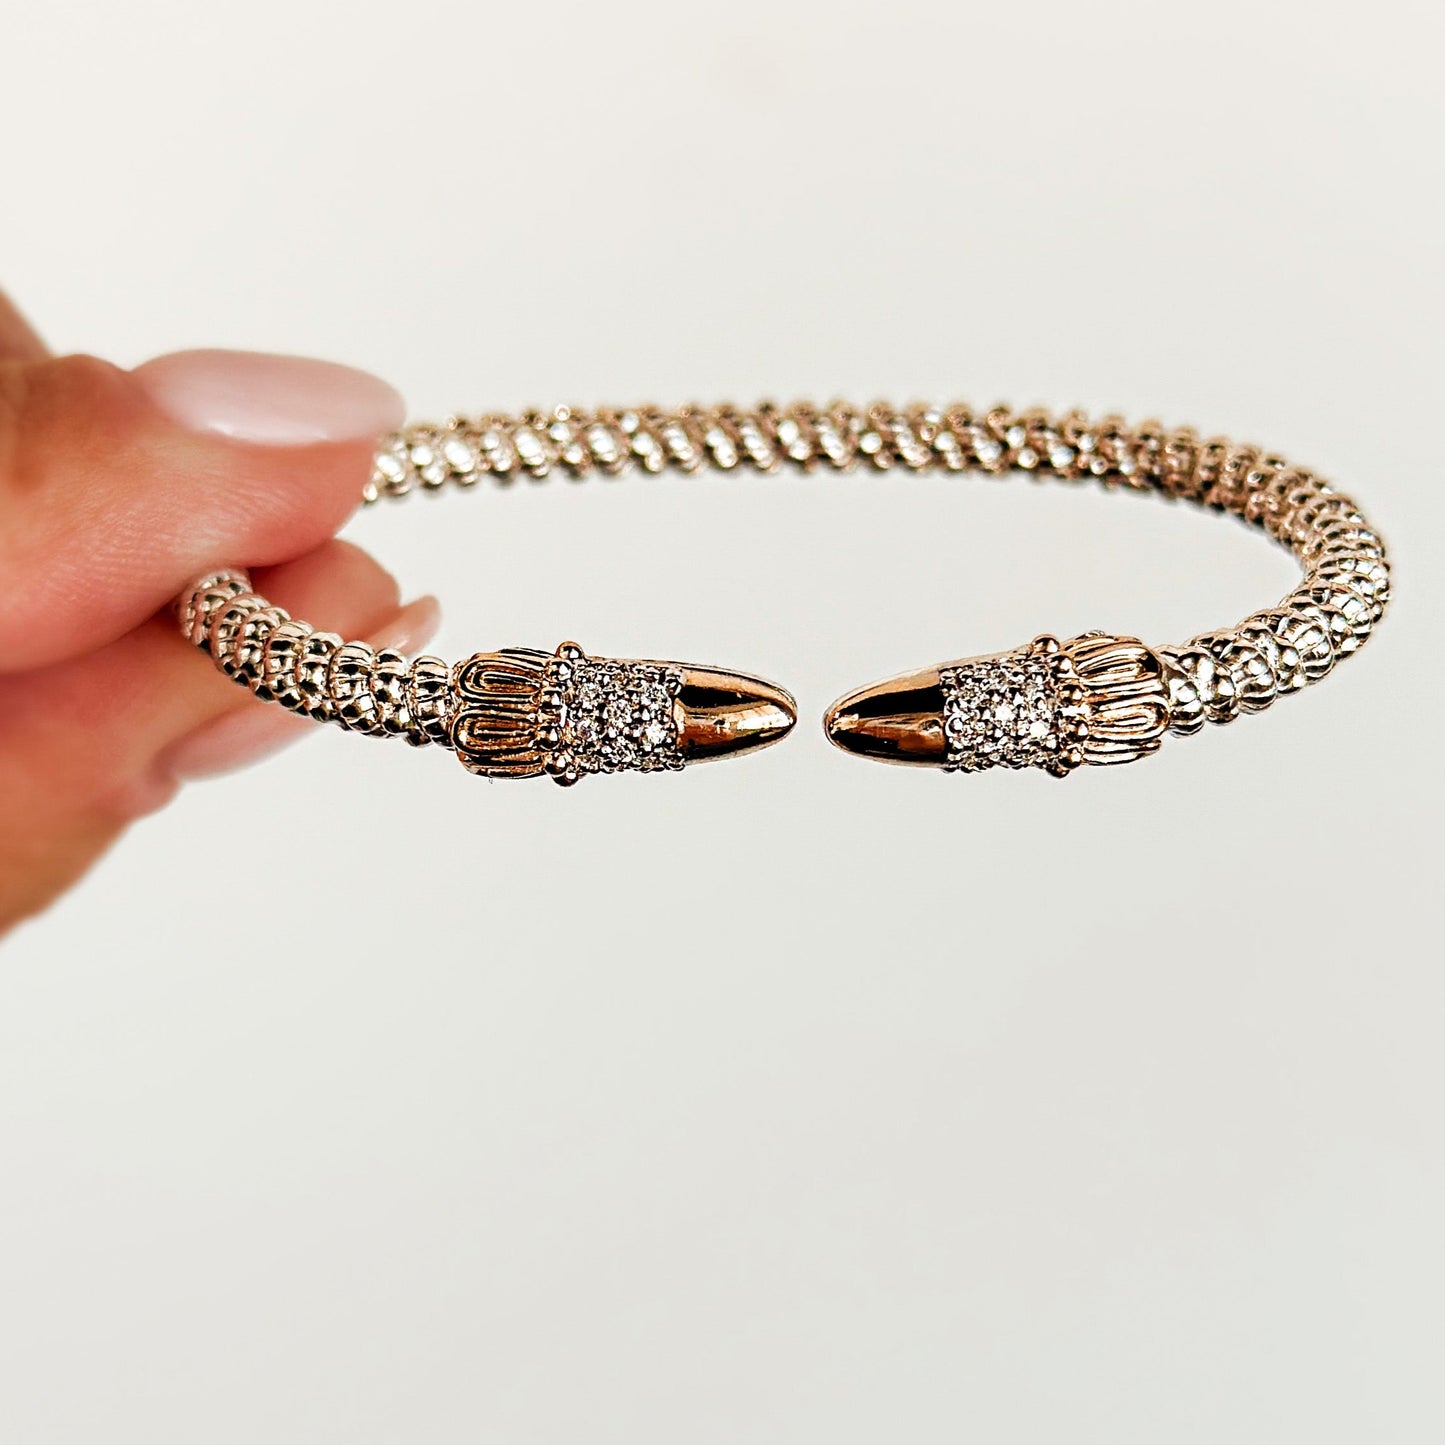 Vahan 14K Gold & Sterling Silver Bracelet with Diamonds 23705D03